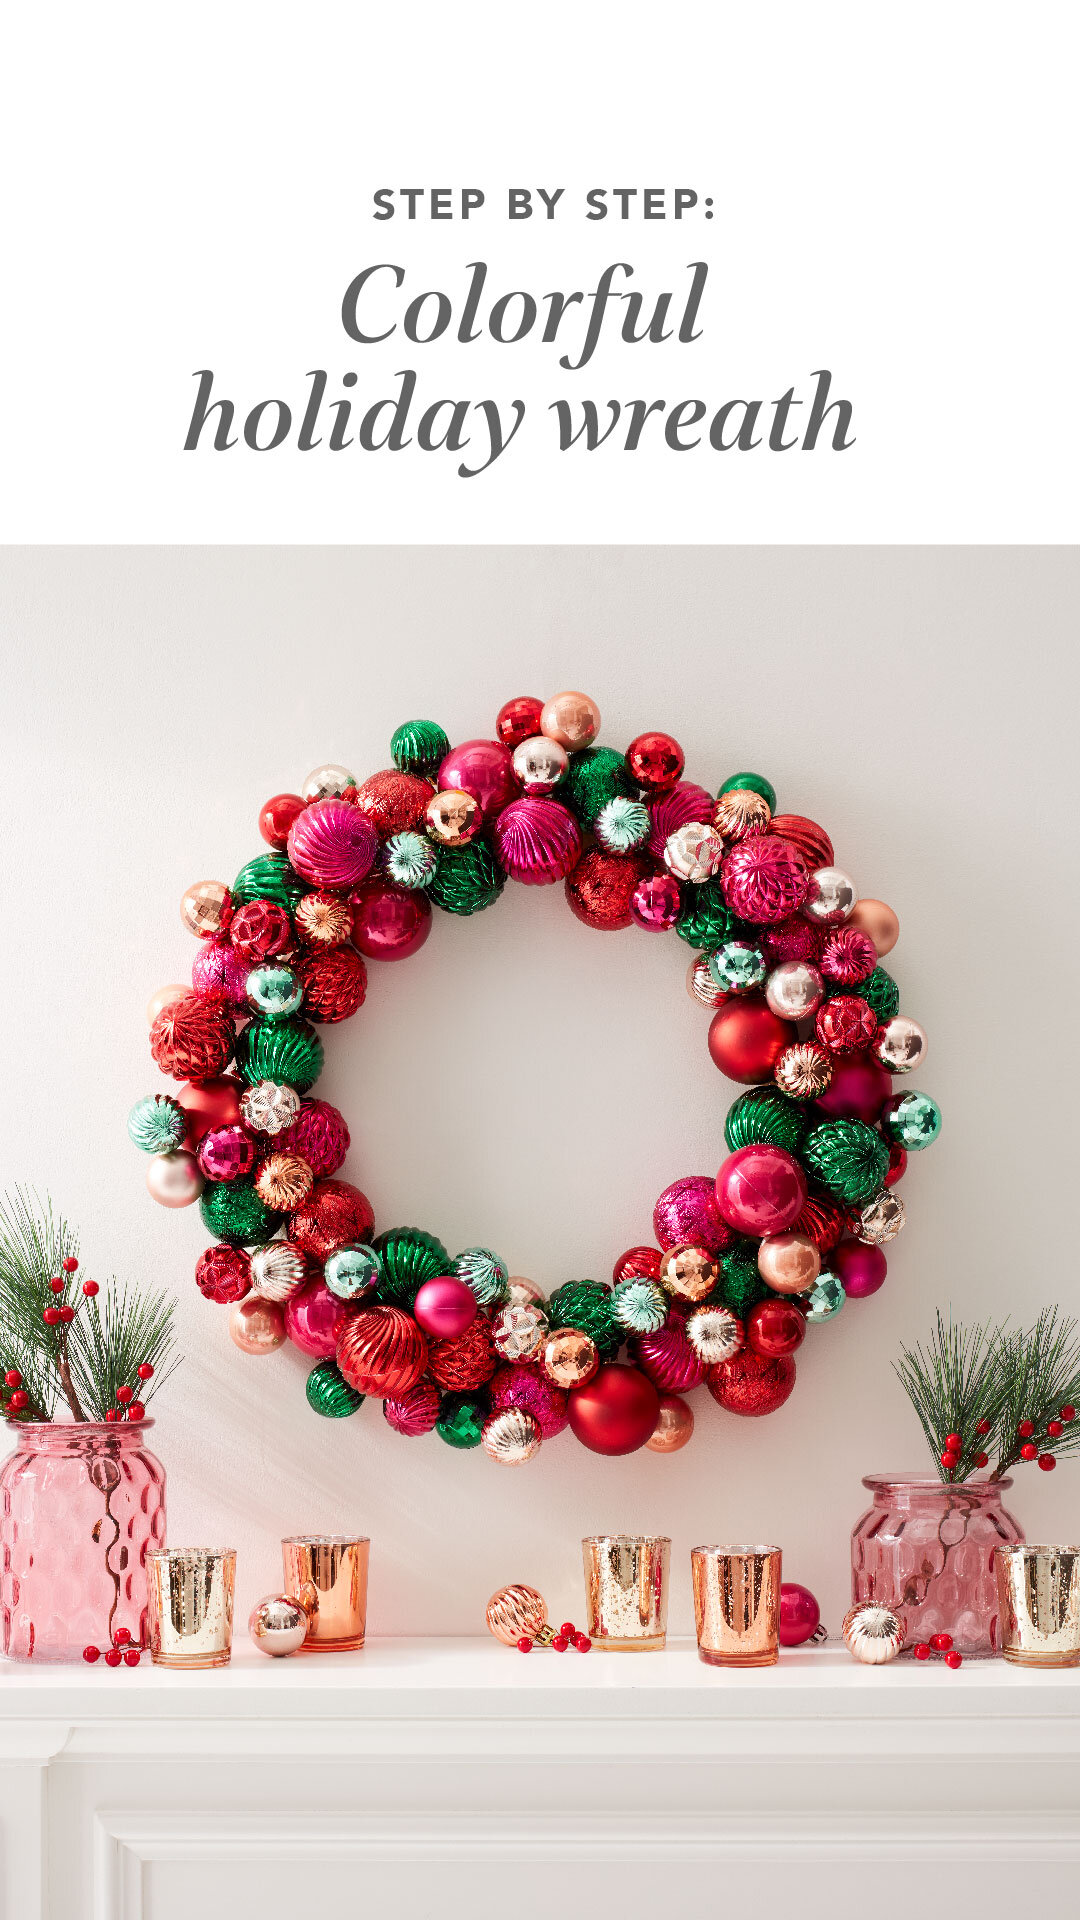 AMZN-Home_HolidayWreaths_Colorful_IGStory_V1_20191213-01.jpg